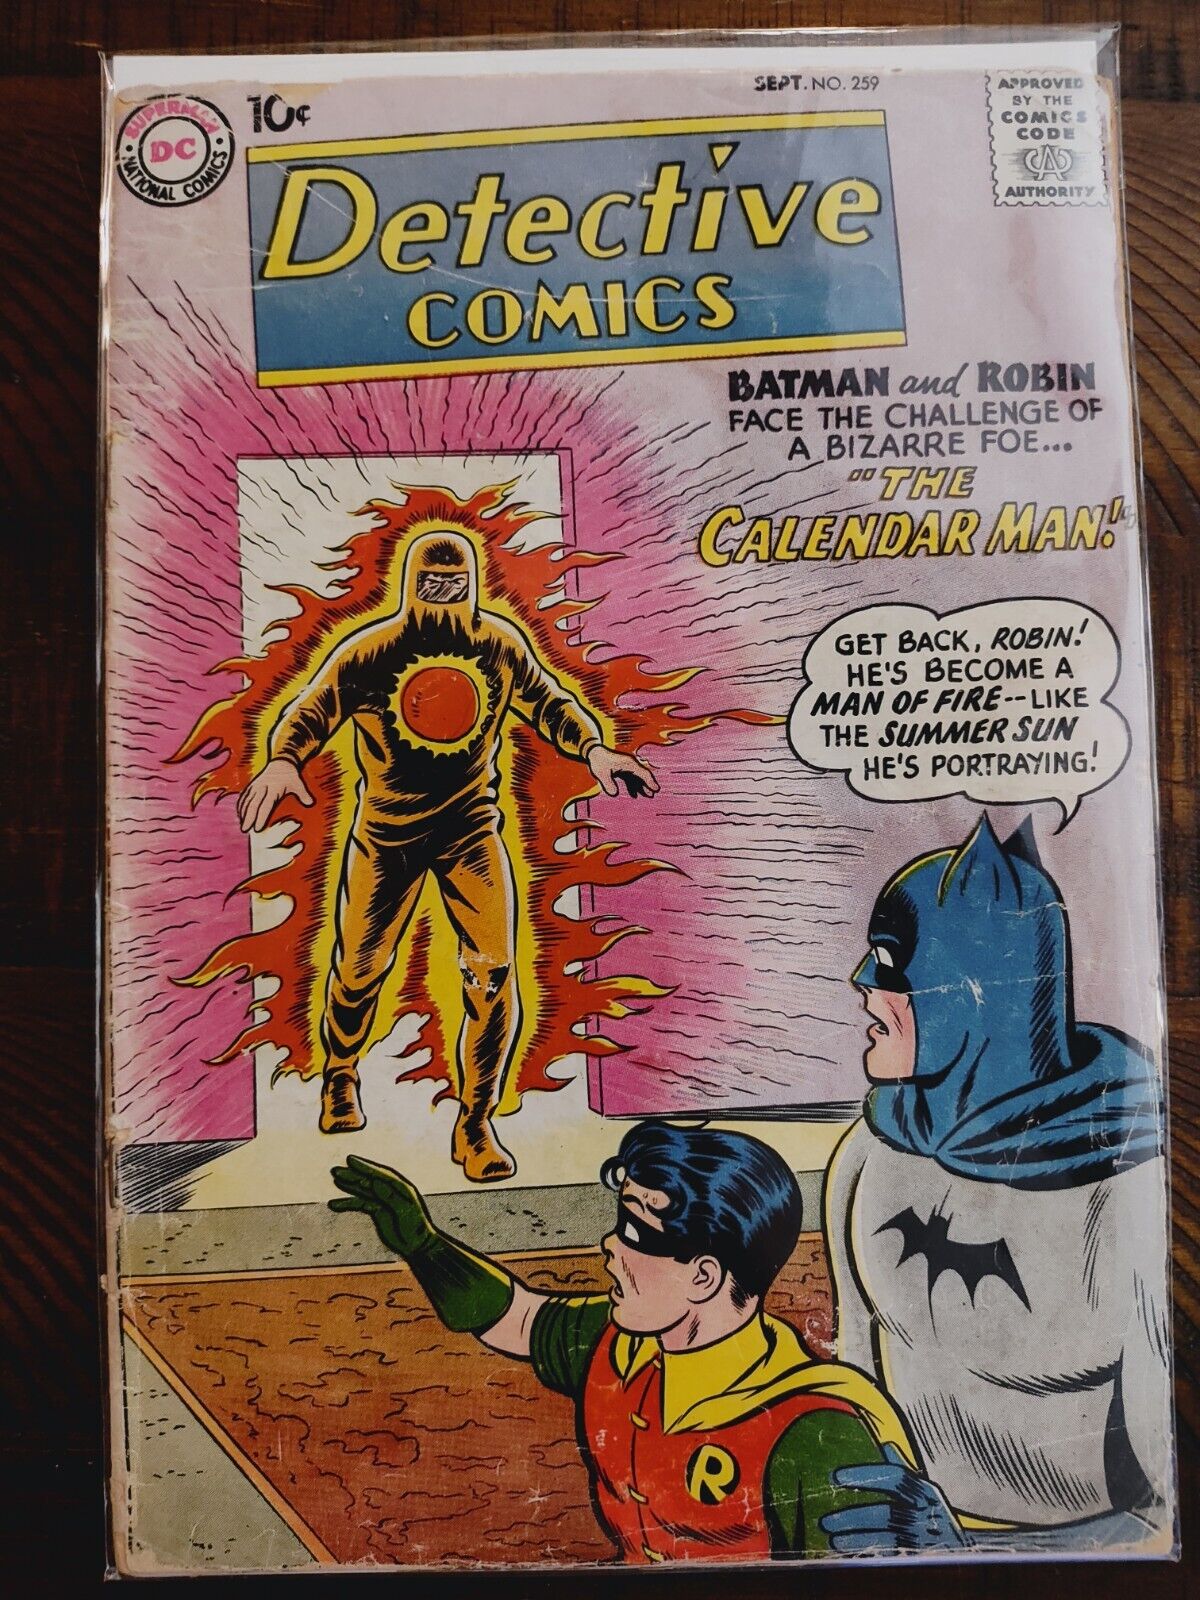 Detective Comics #259 1958 KEY: 1ST APPEARANCE CALENDAR MAN